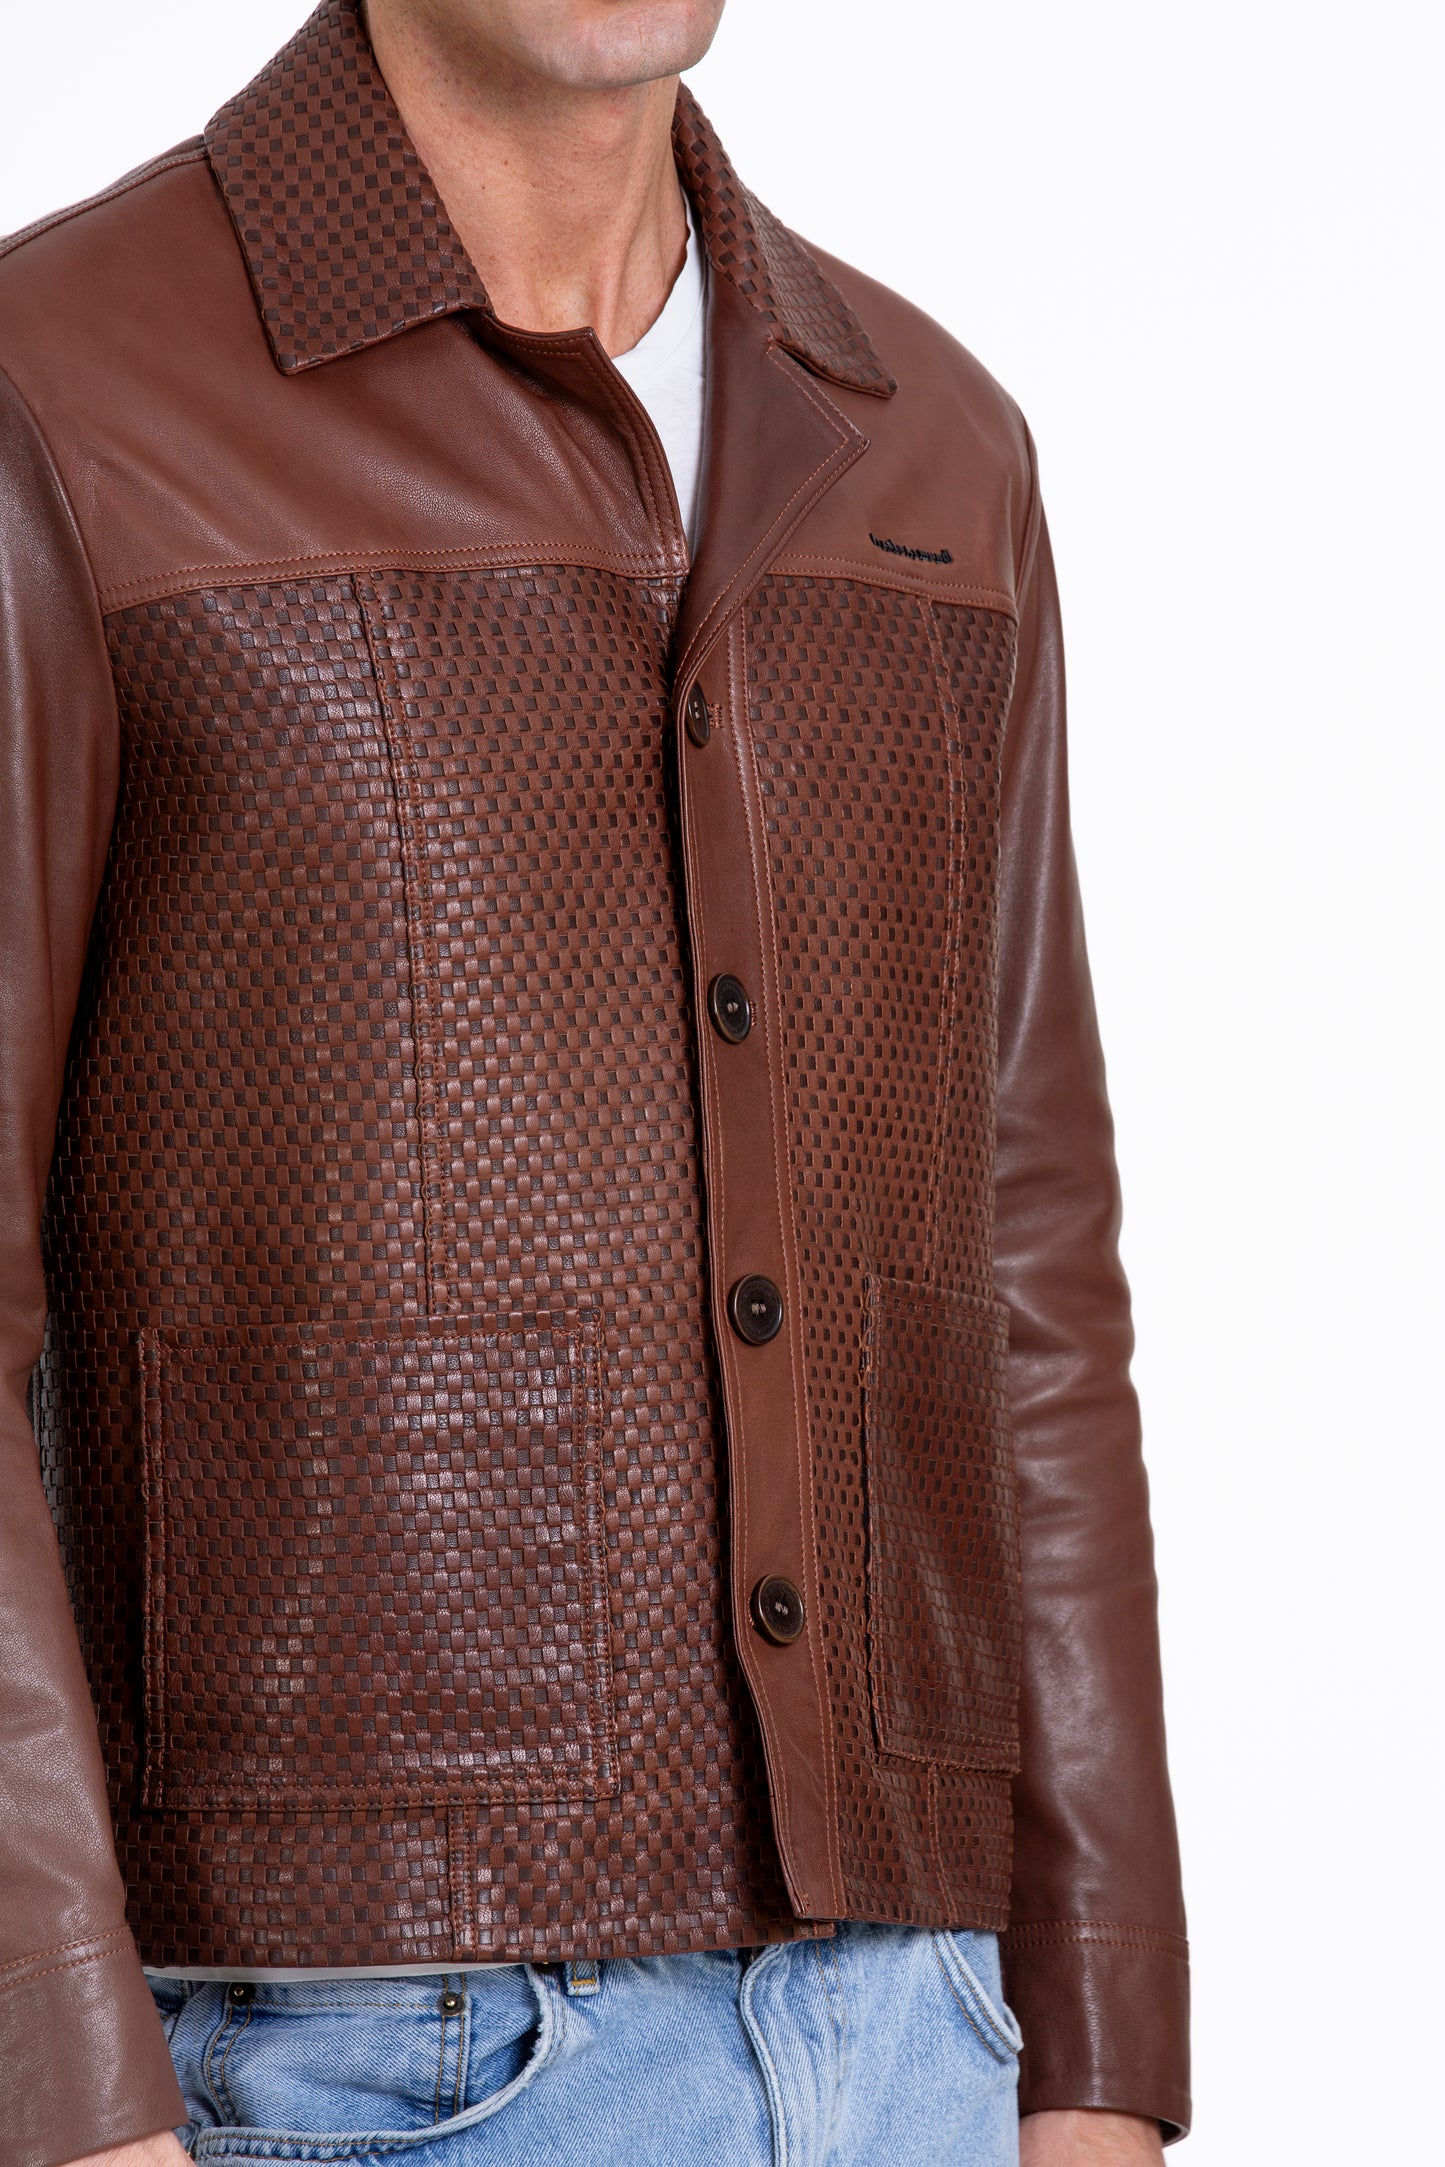 The Glasgow Tan Handwoven Leather Men Jacket